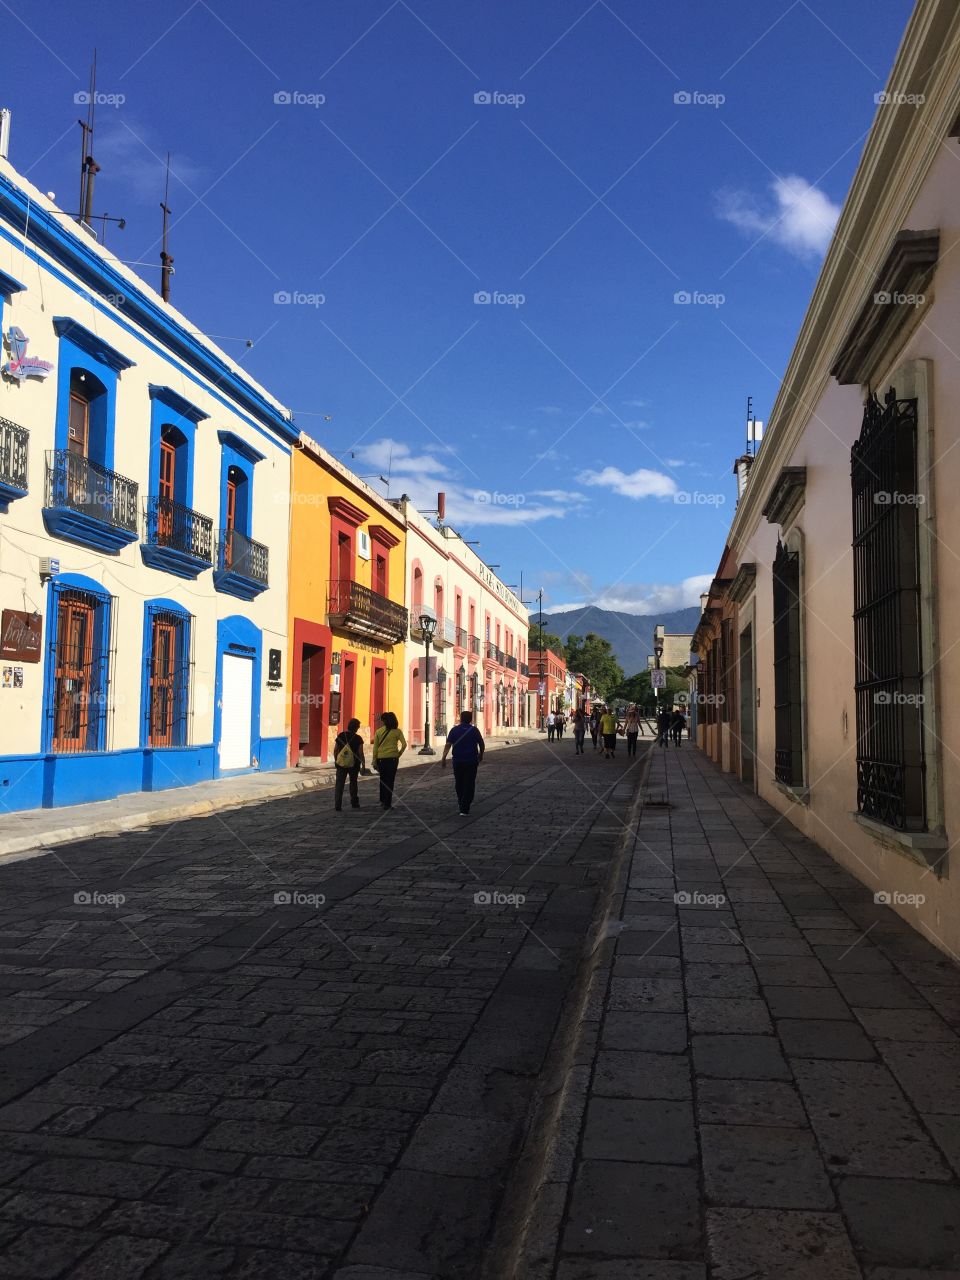 Main Street in Oaxaca, Mexico